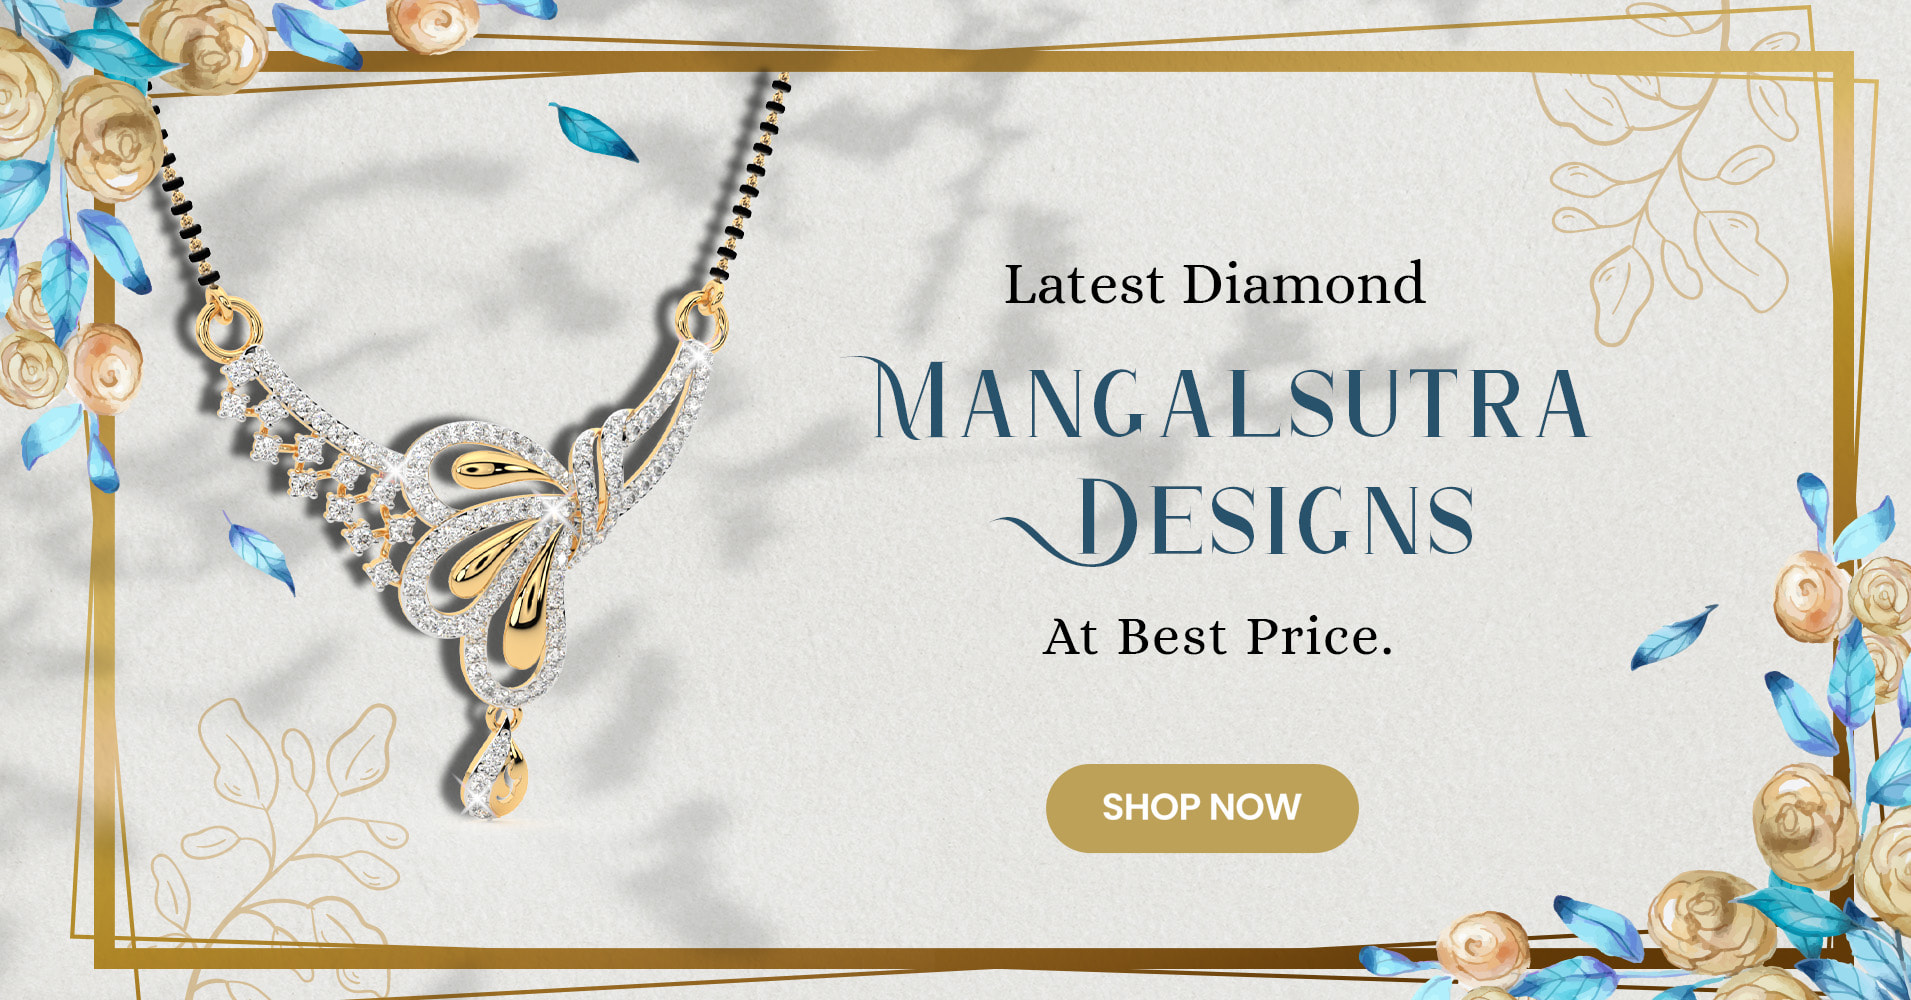 Latest Diamond Mangalsutra Designs At Best Price